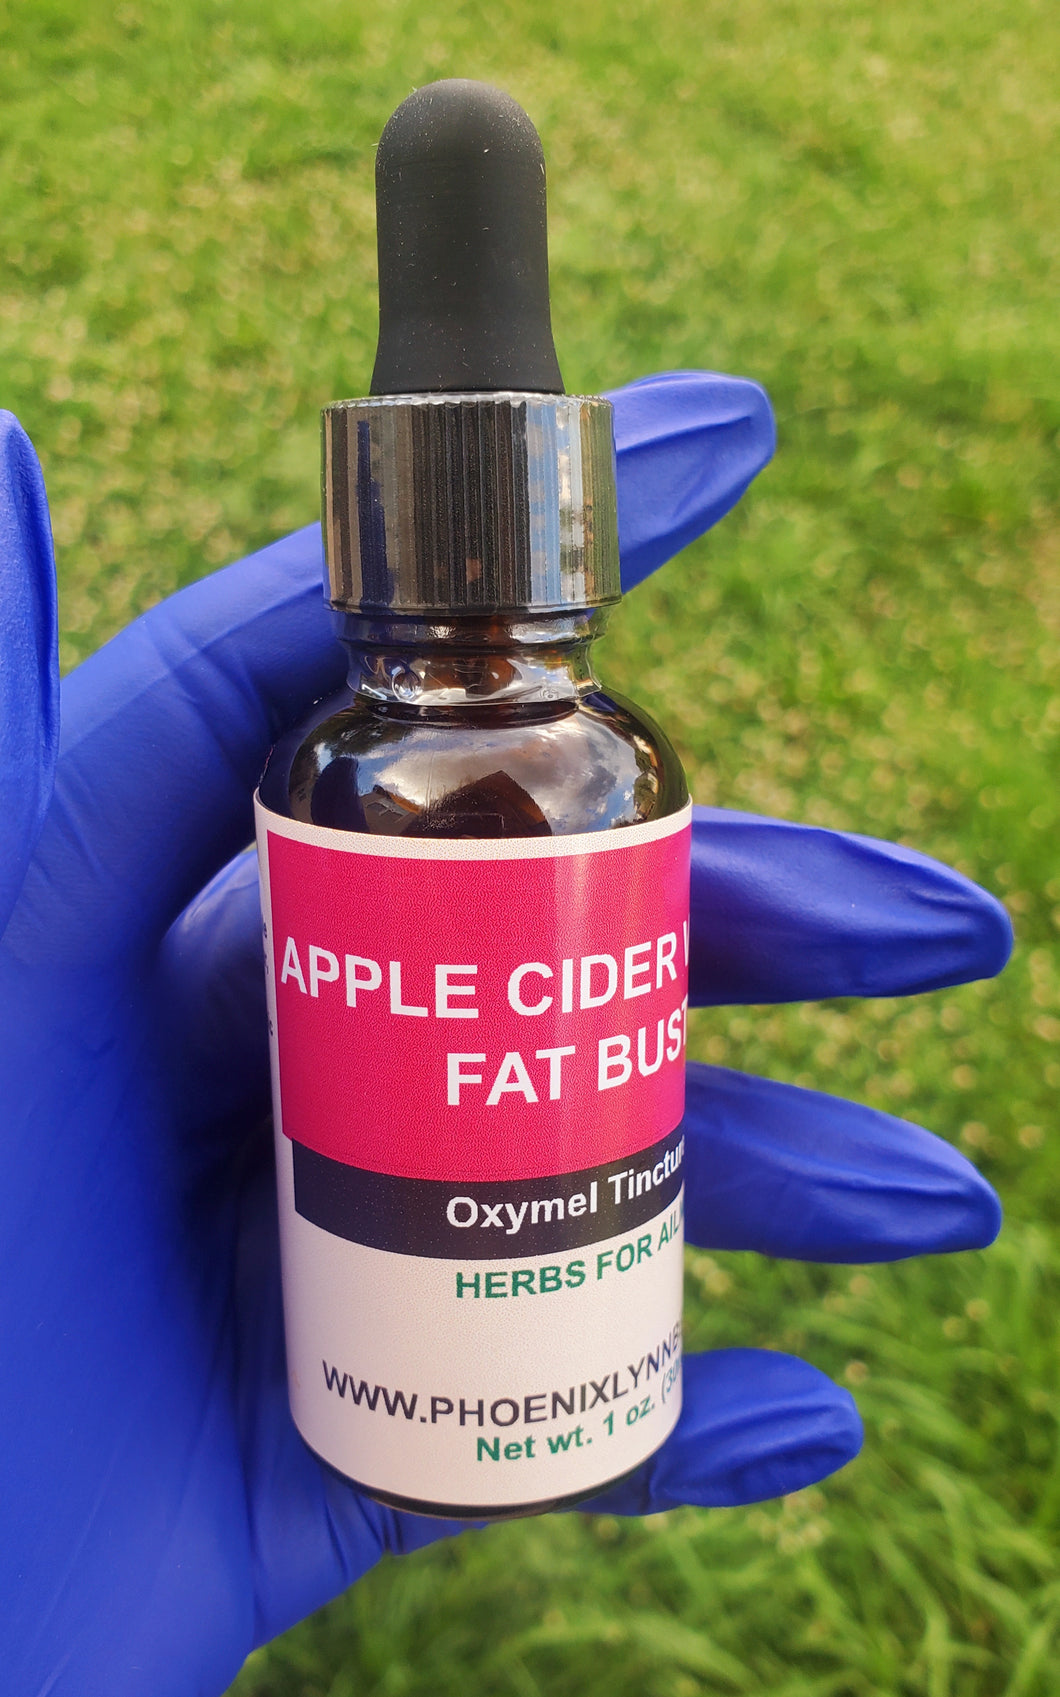 Apple Cider Vinegar FAT BUSTER (Oxymel) Tincture Organic